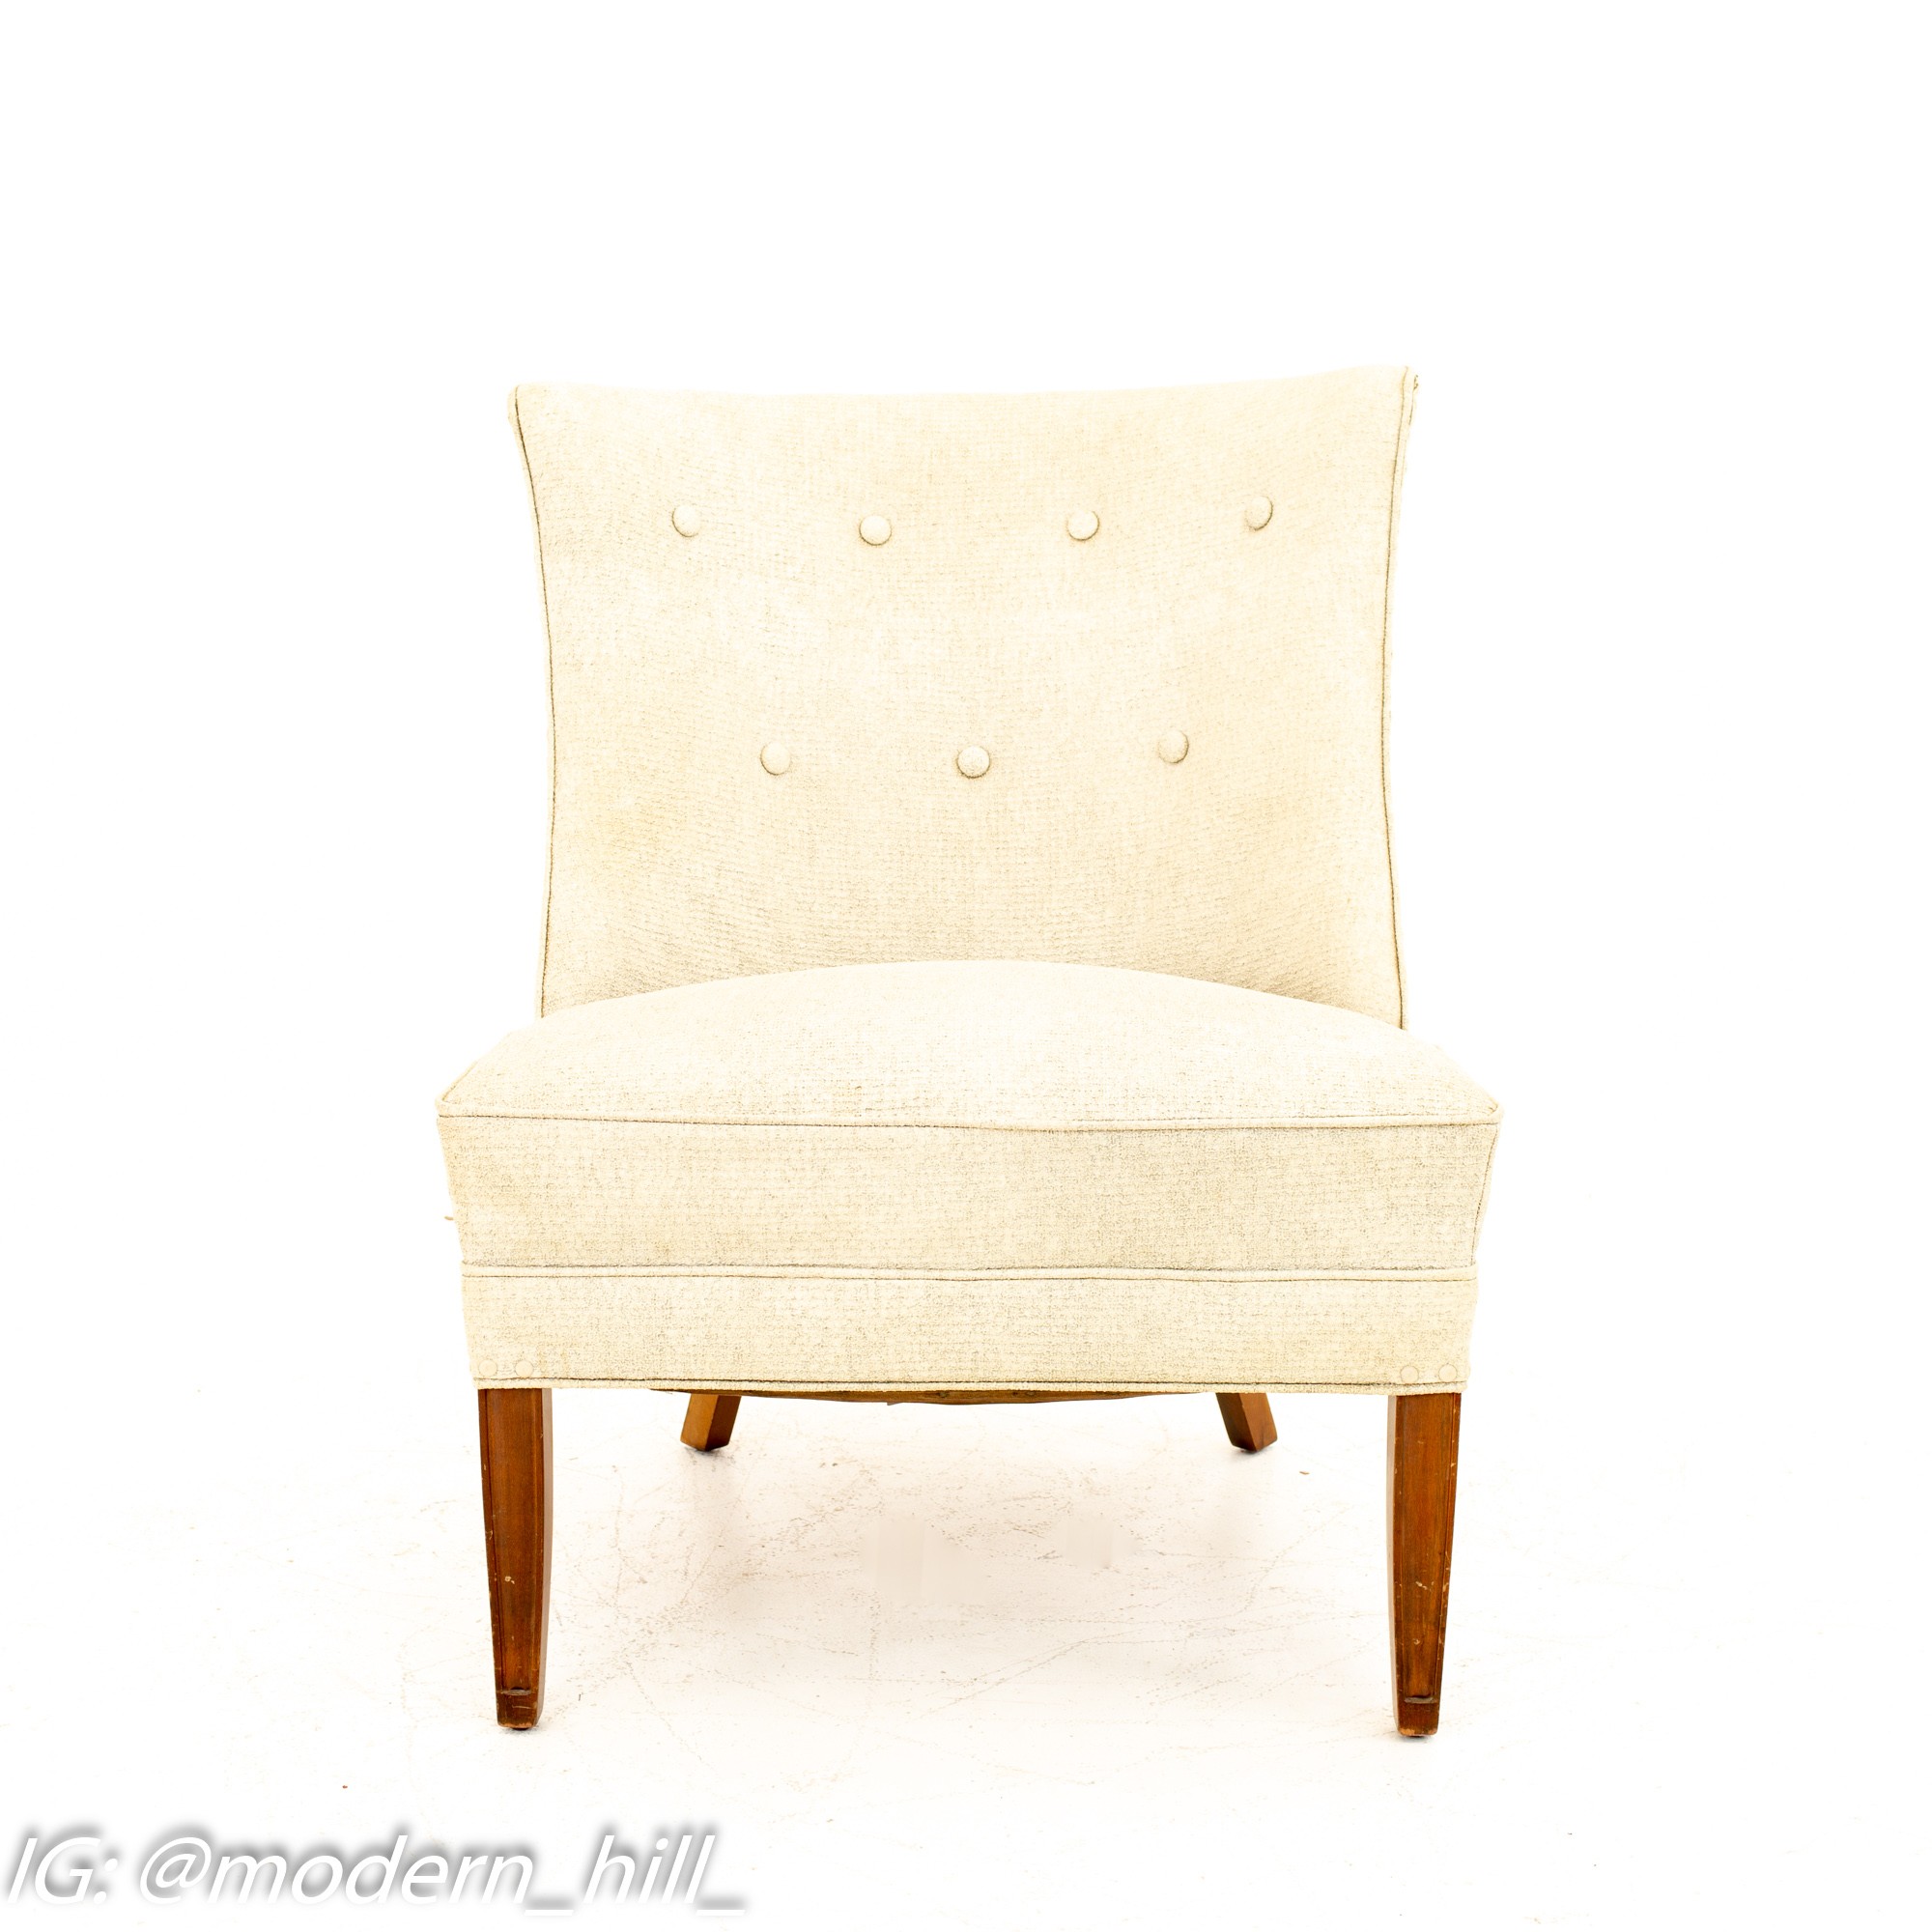 Dunbar Style Mid Century Lounge Chairs - Pair